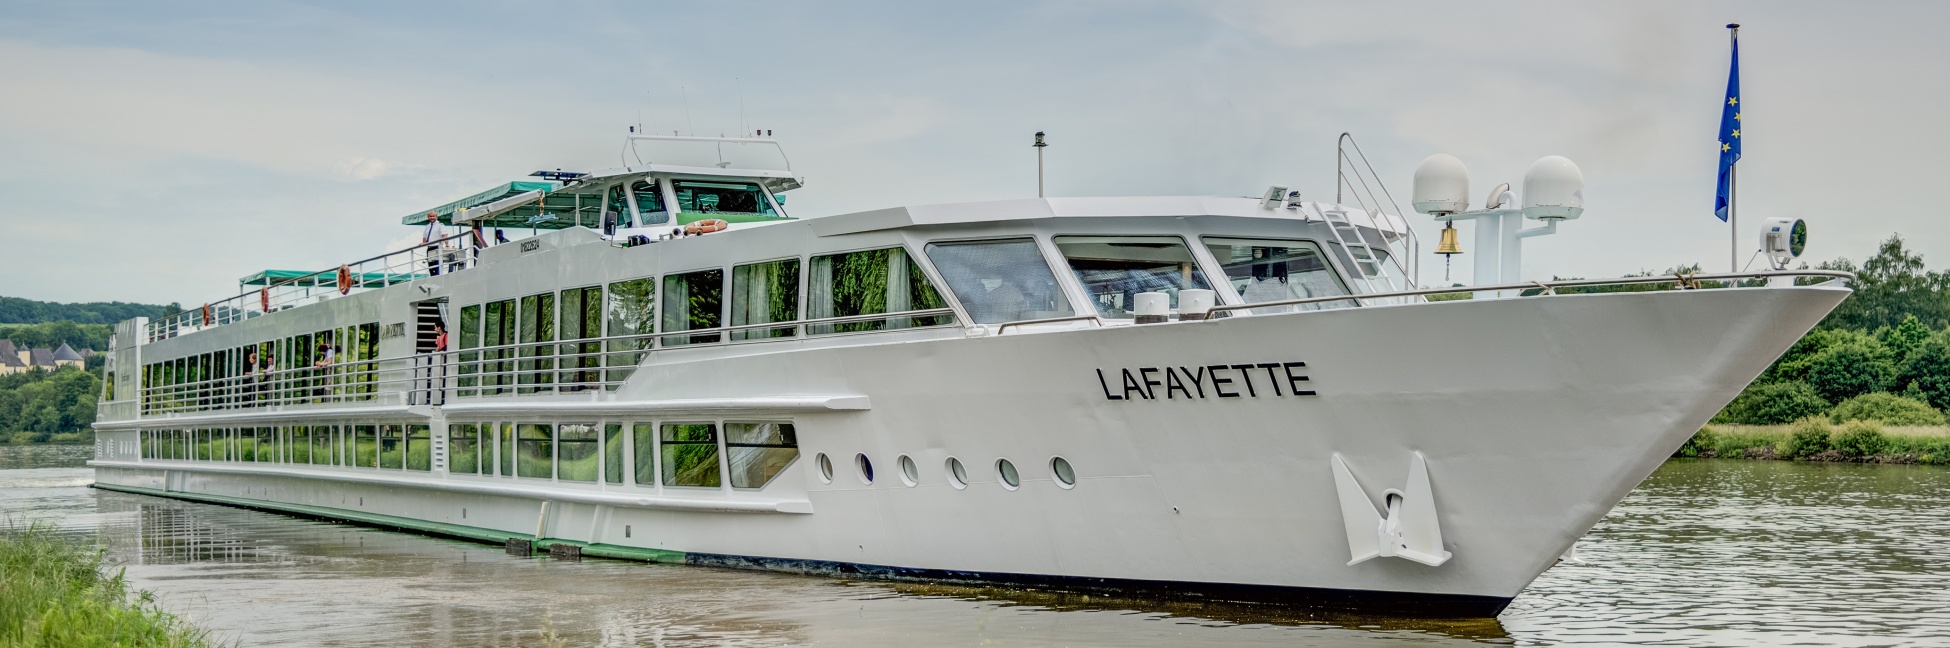 Imágenes del barco MS Lafayette